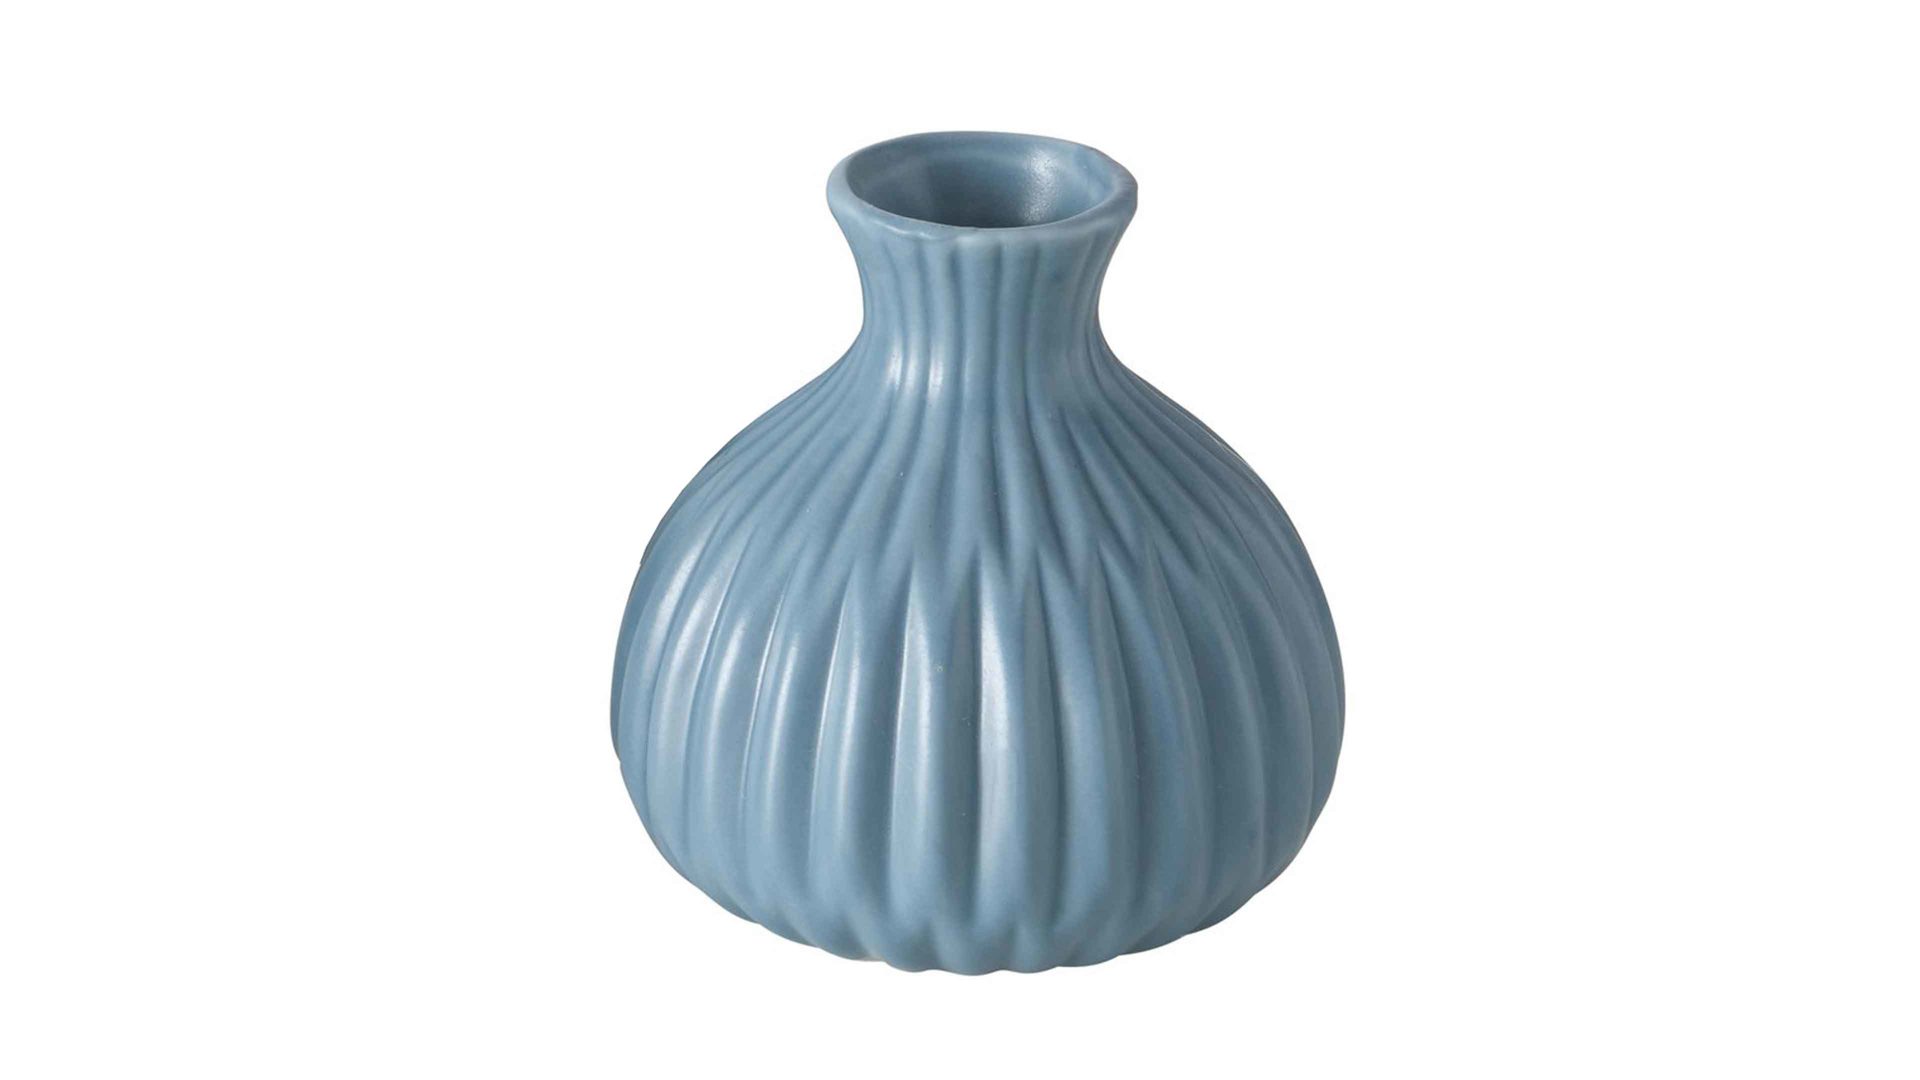 Vase Interliving BEST BUDDYS! aus Keramik in Blau Interliving BEST BUDDYS! Vase Esko mattblaues Porzellan - Höhe ca. 12 cm